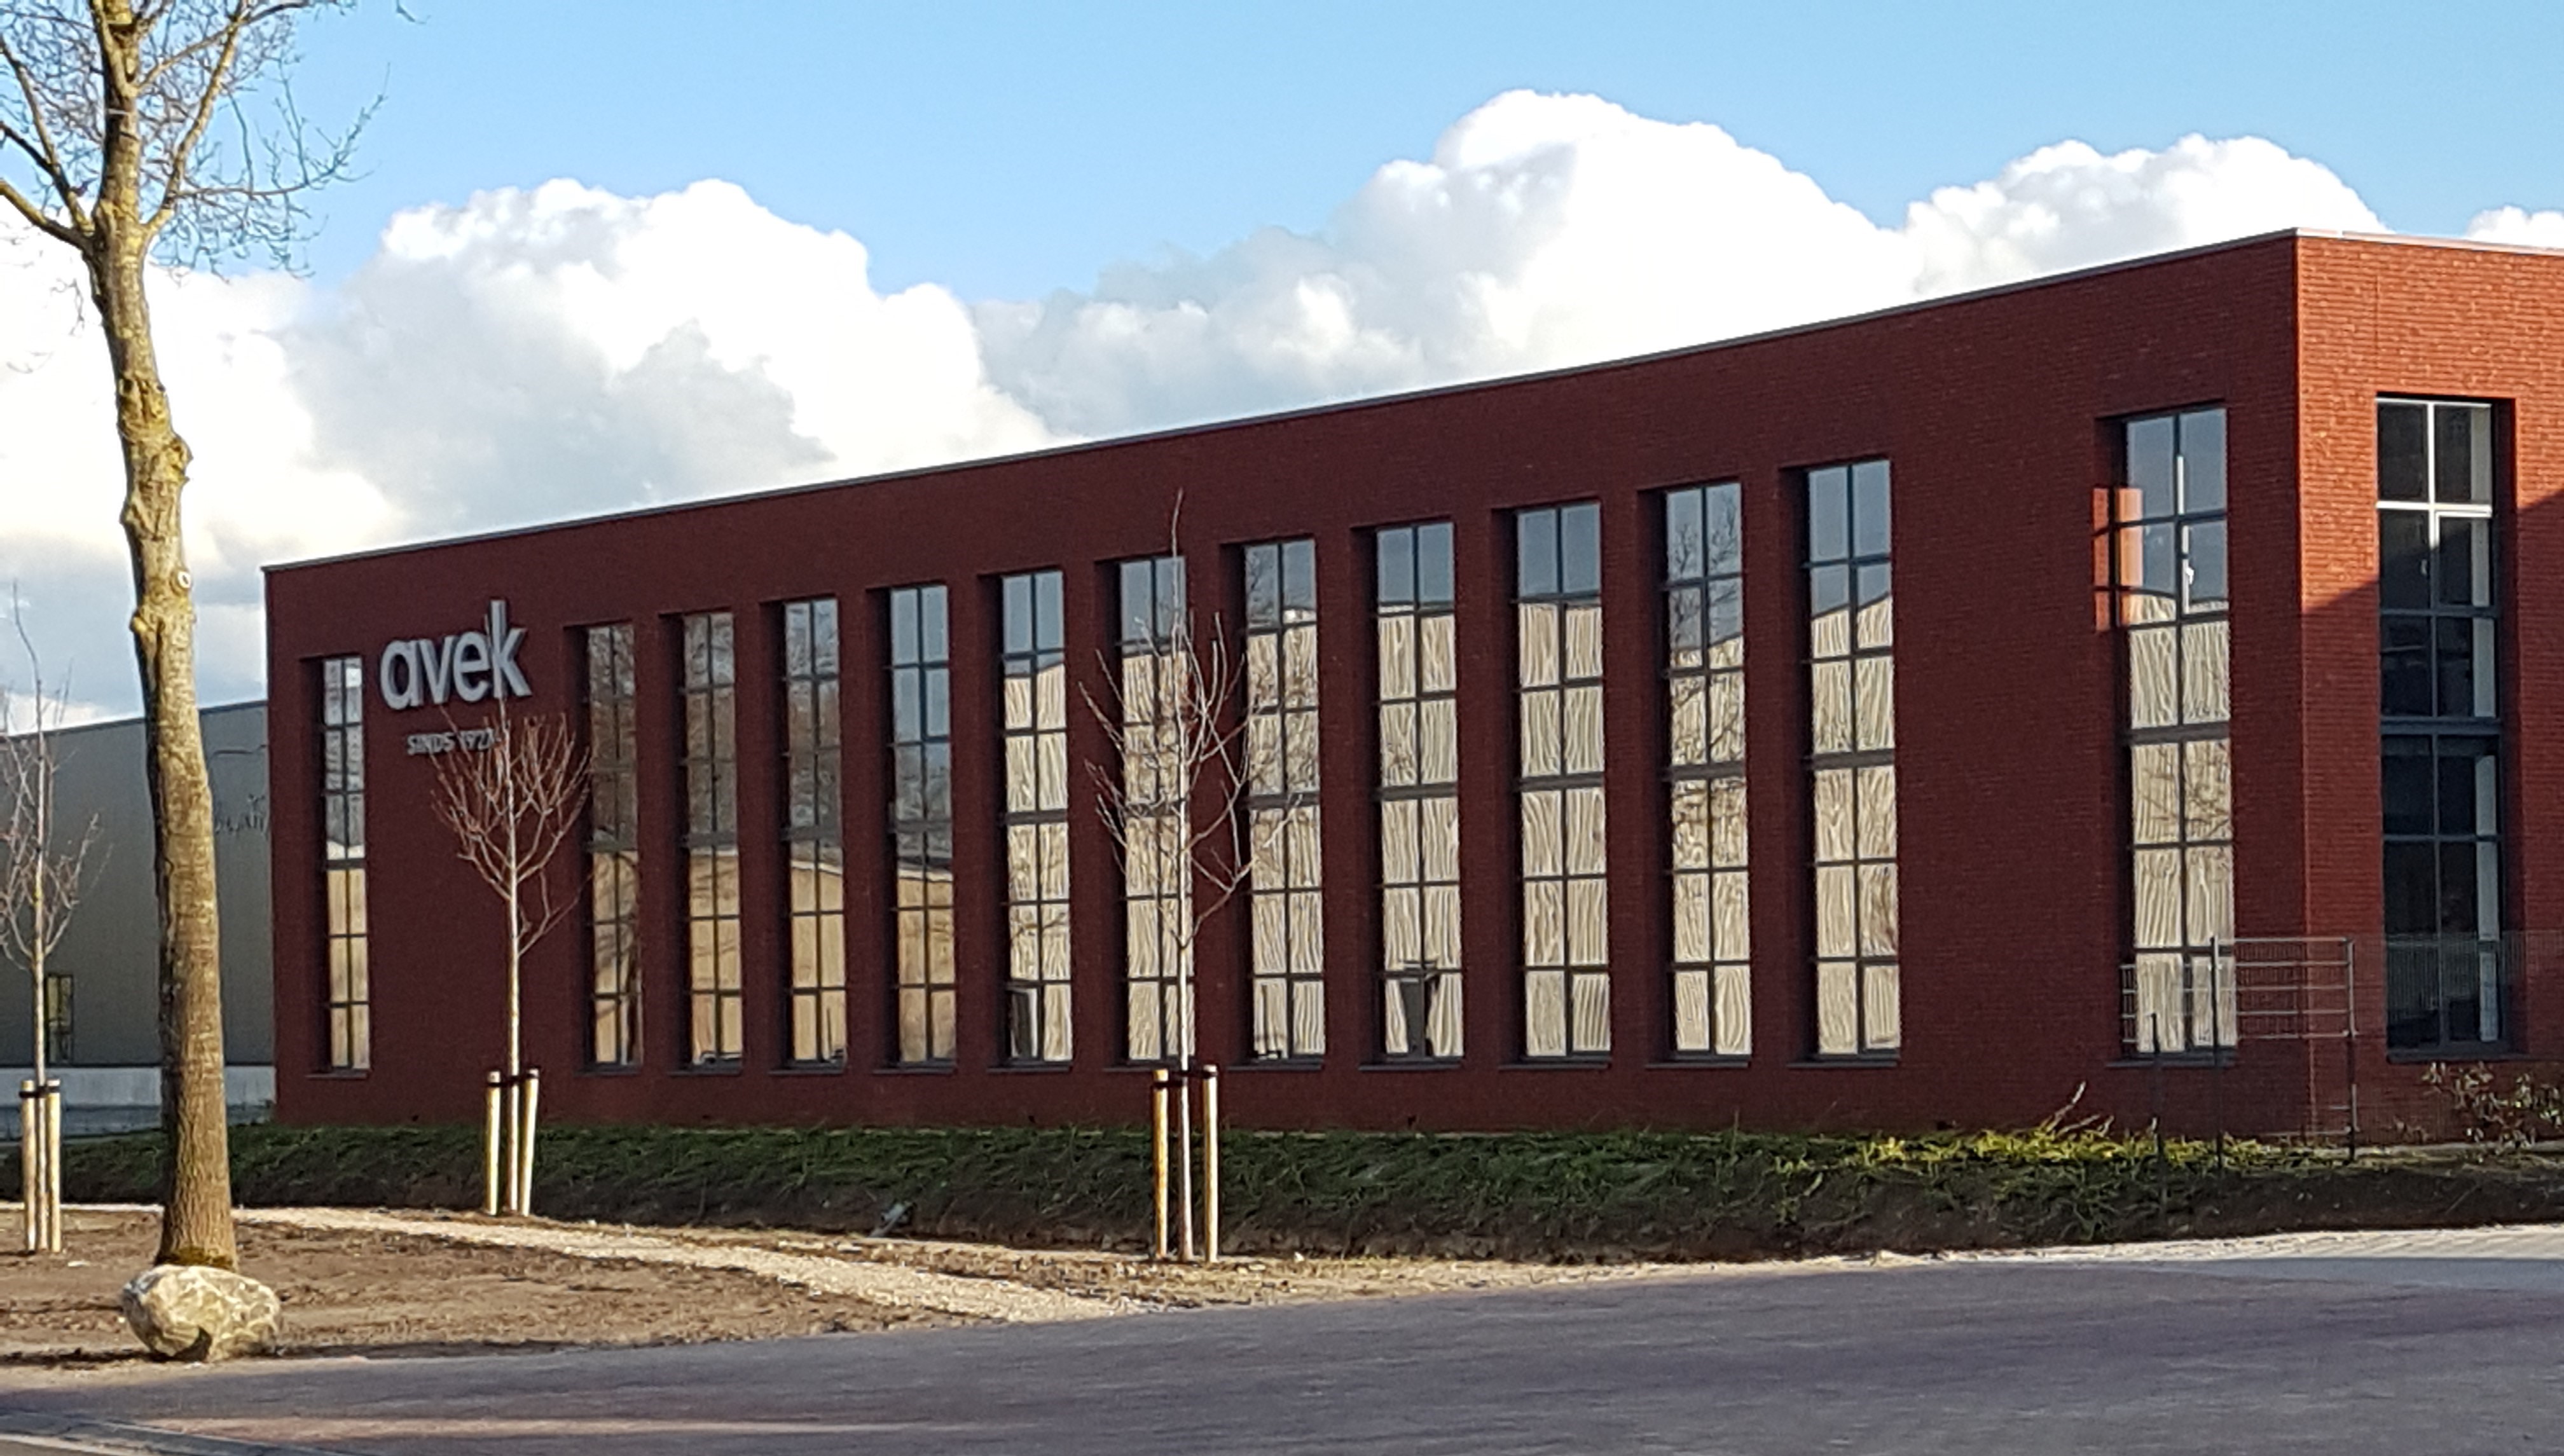  Nieuwe duurzame fabriek beddenfabrikant AVEK geopend